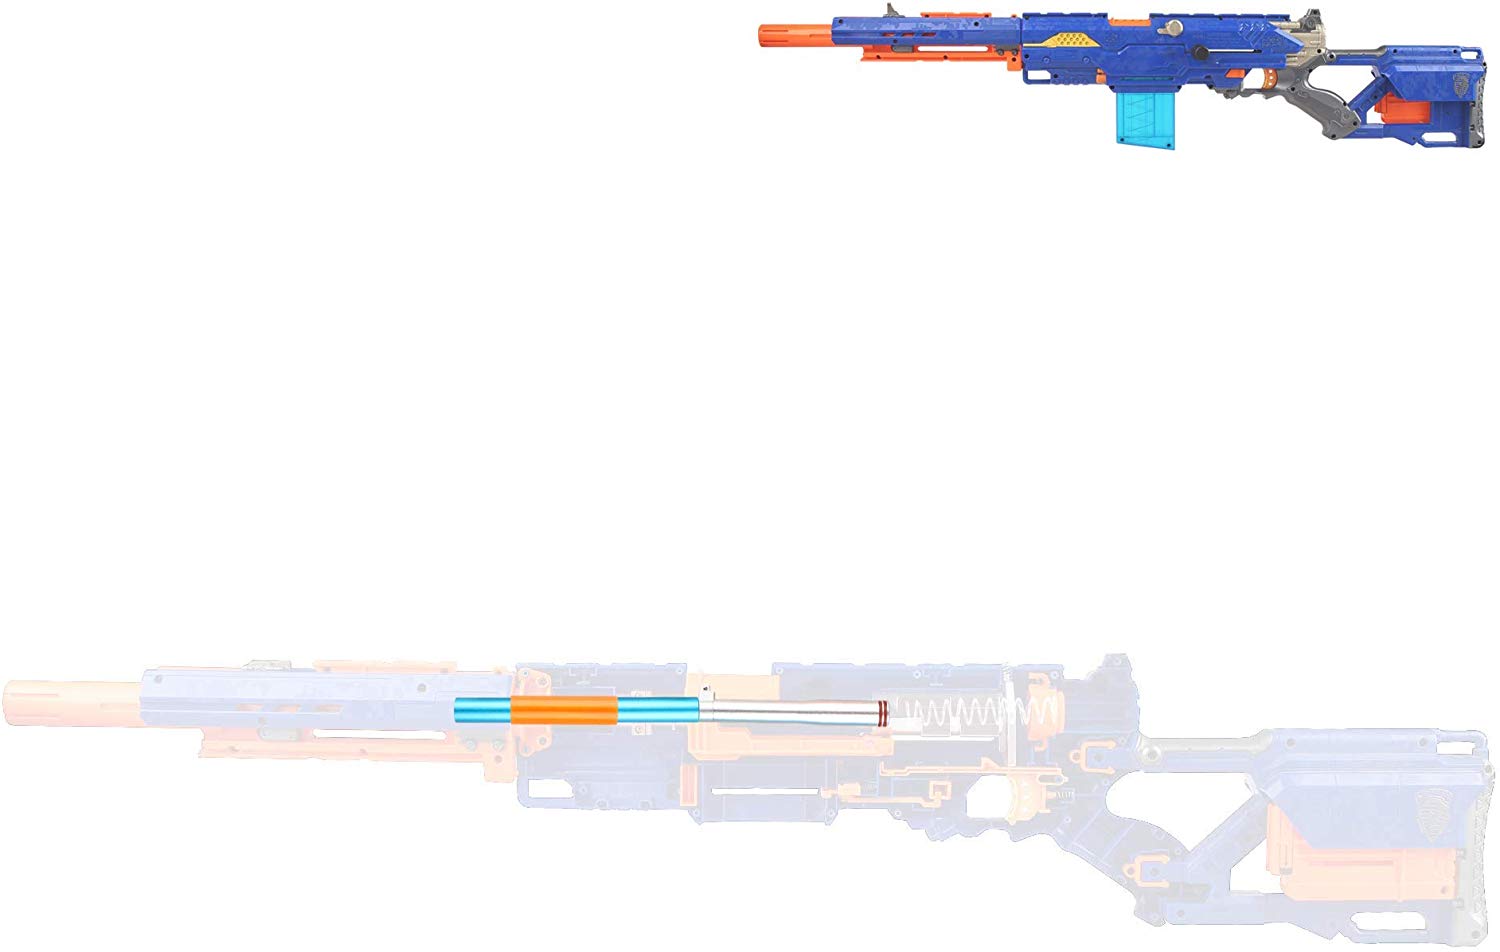 Nerf N-Strike LongStrike CS-6 Sniper Rifle Blue w/ Sight Looks